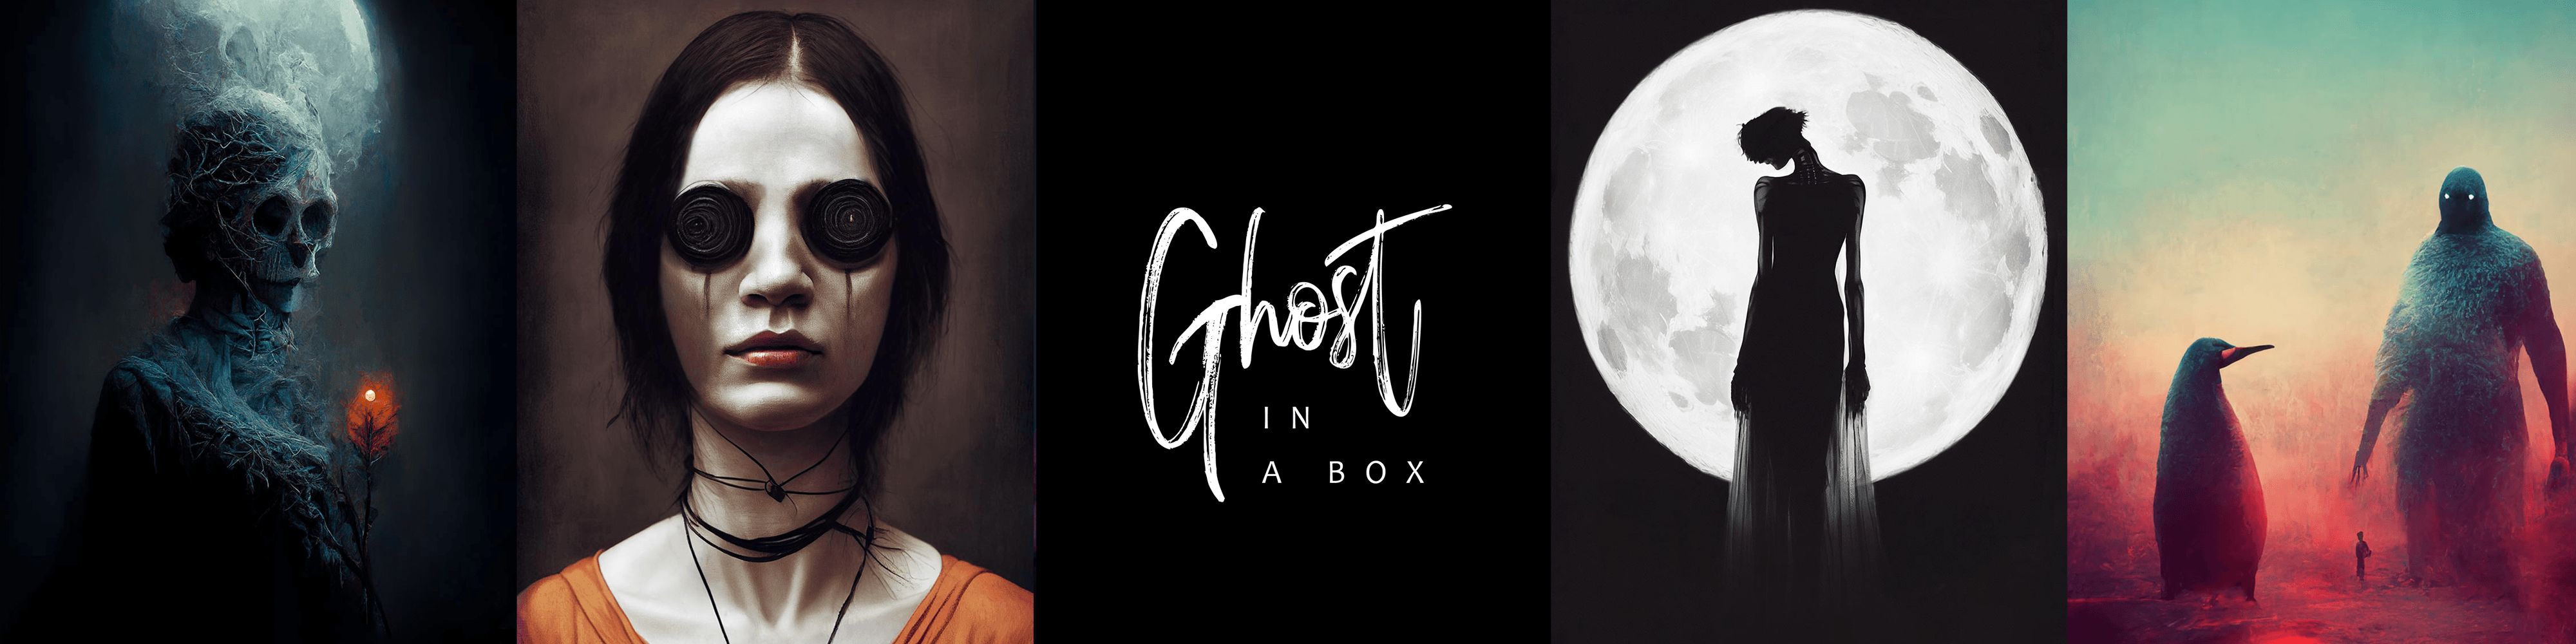 GhostInABox bannière